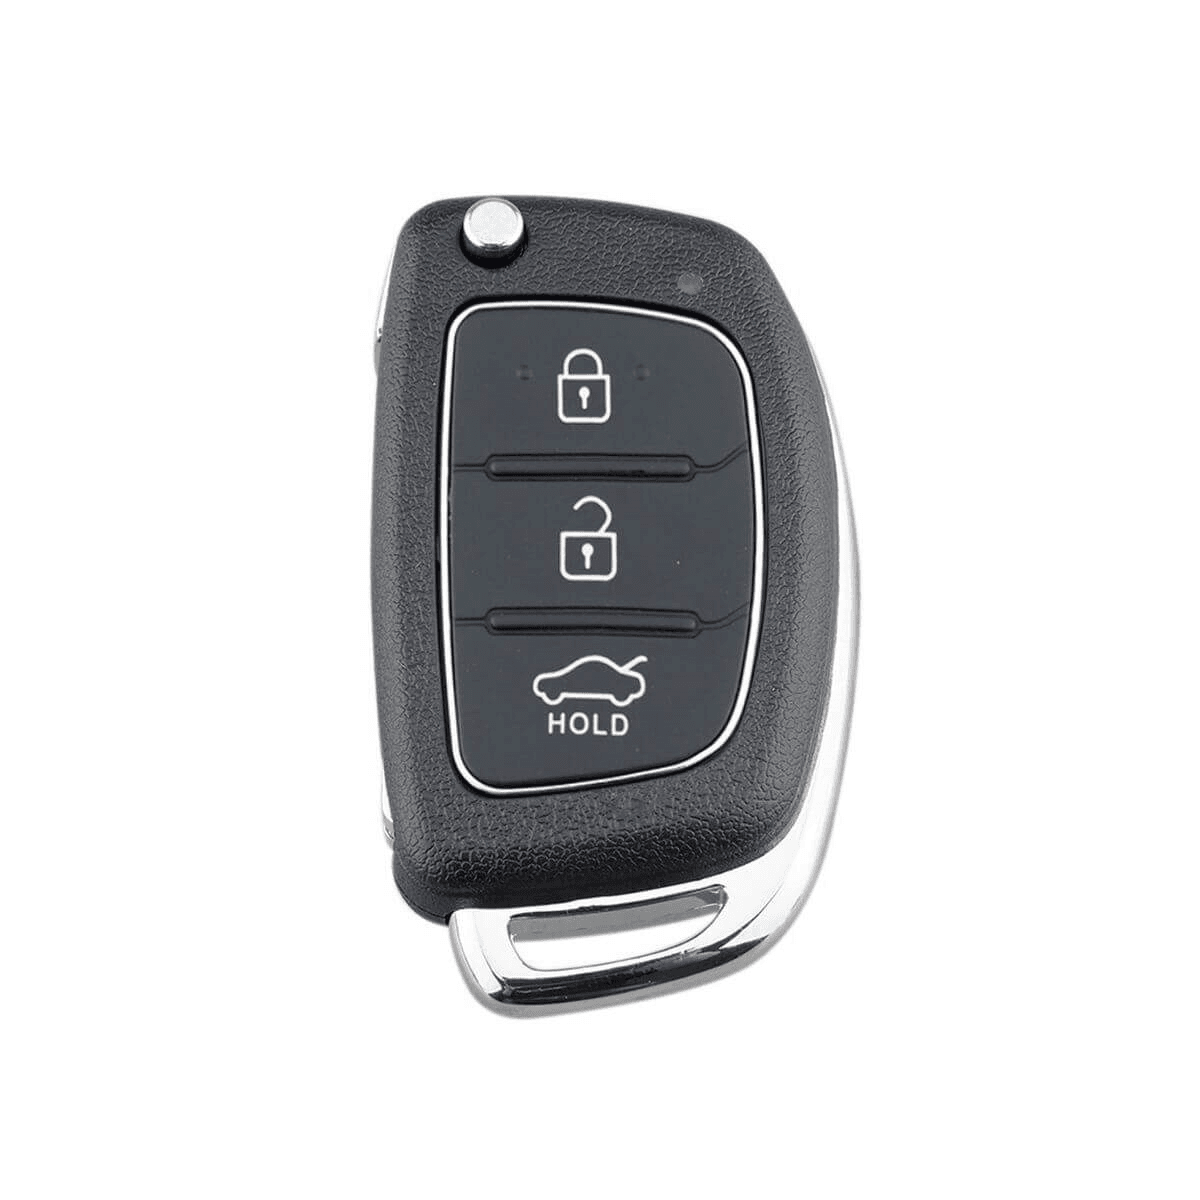 Selected image for CAR ACESSORIES 888 Kućište auto ključa sa 3 tastera za Hyundai  E41-AP000